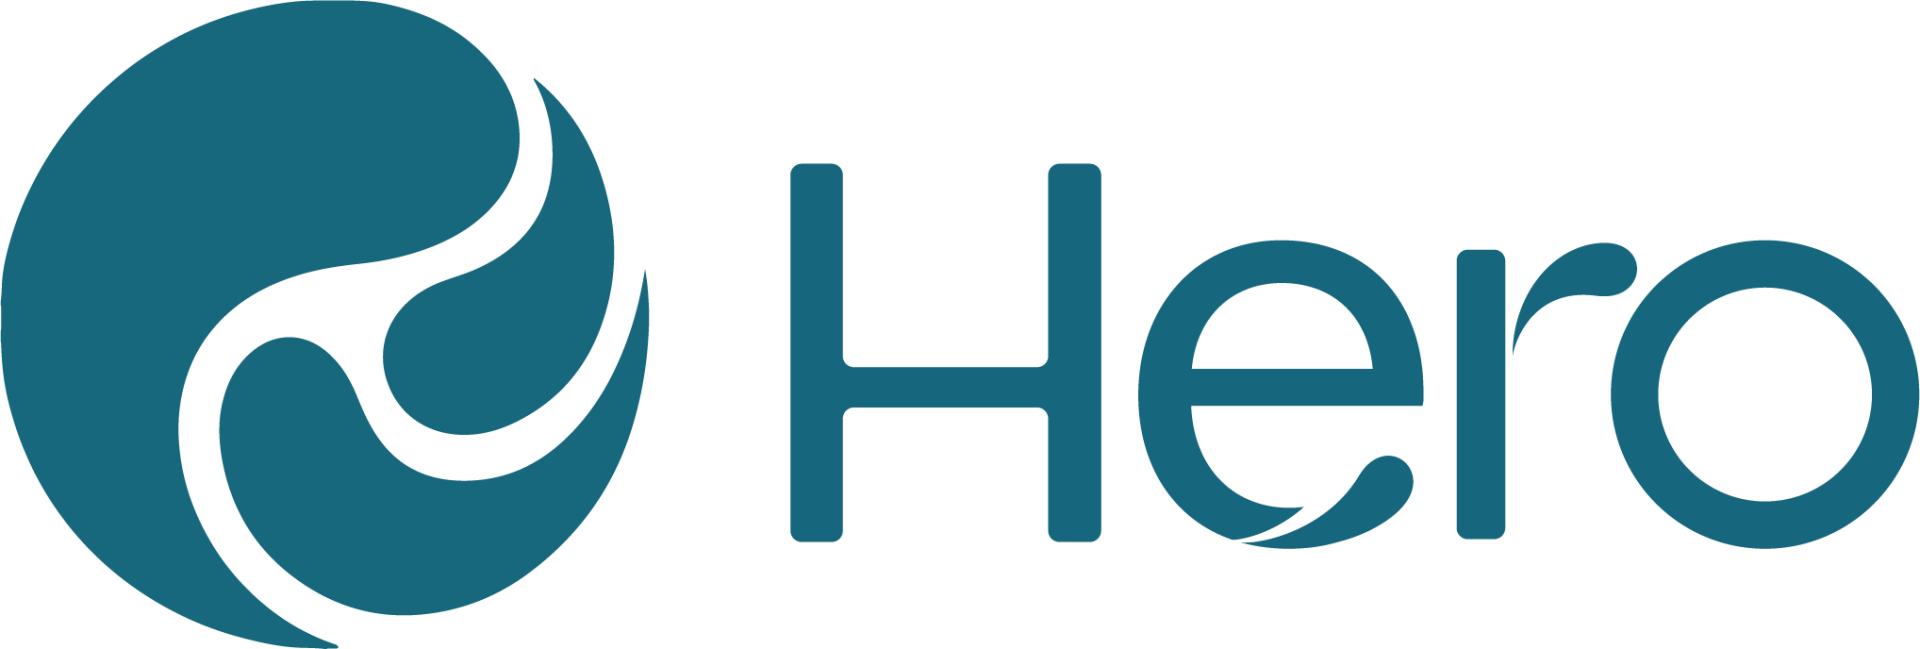 HERO logo